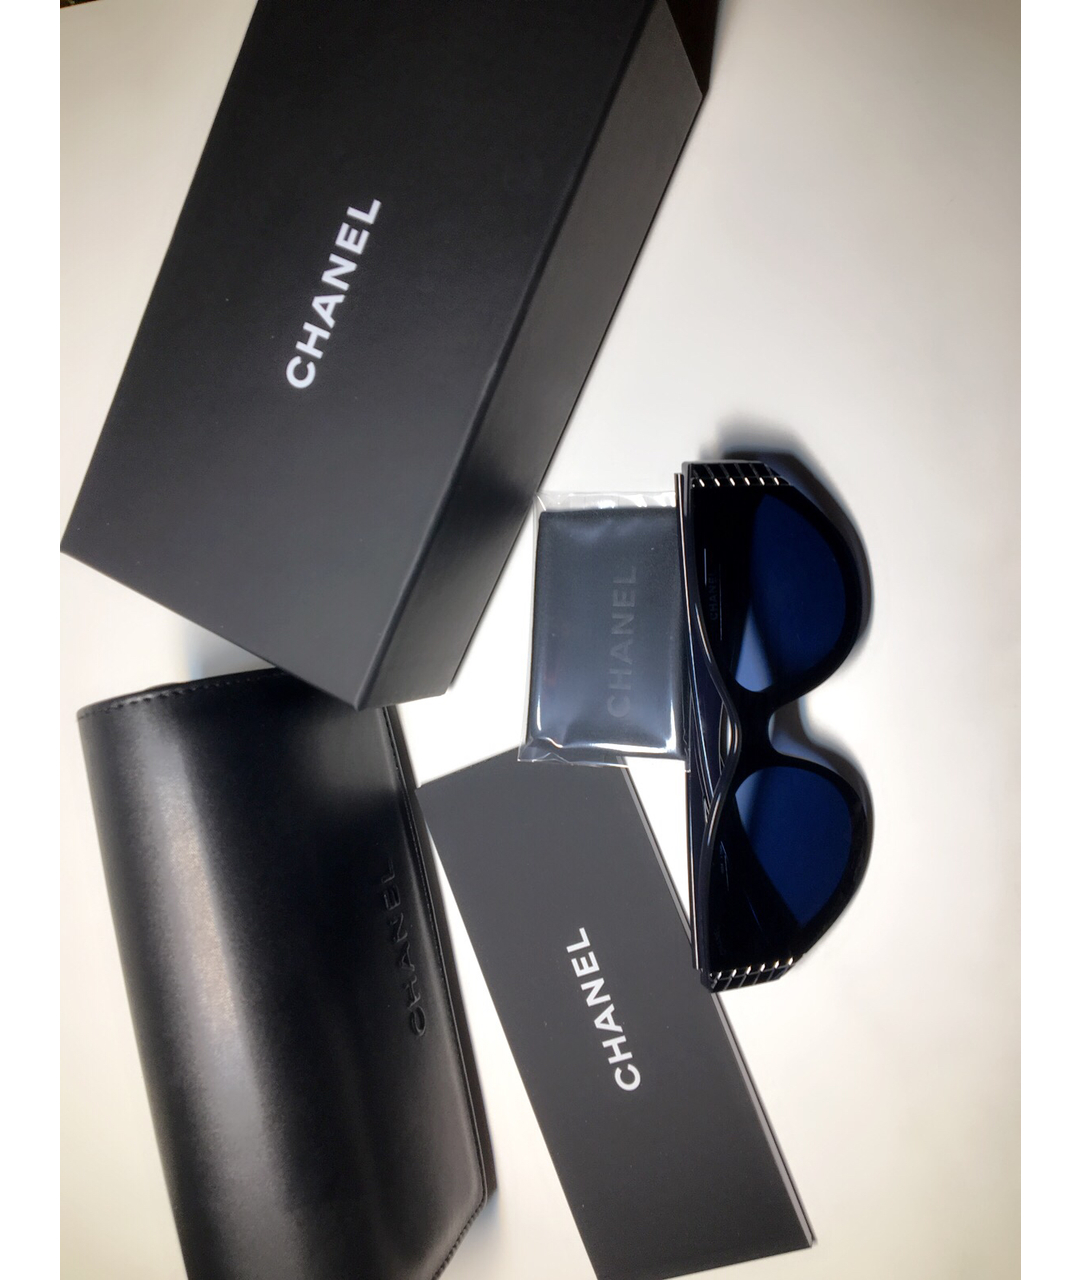 CHANEL PRE-OWNED Темно-синие пластиковые солнцезащитные очки, фото 2